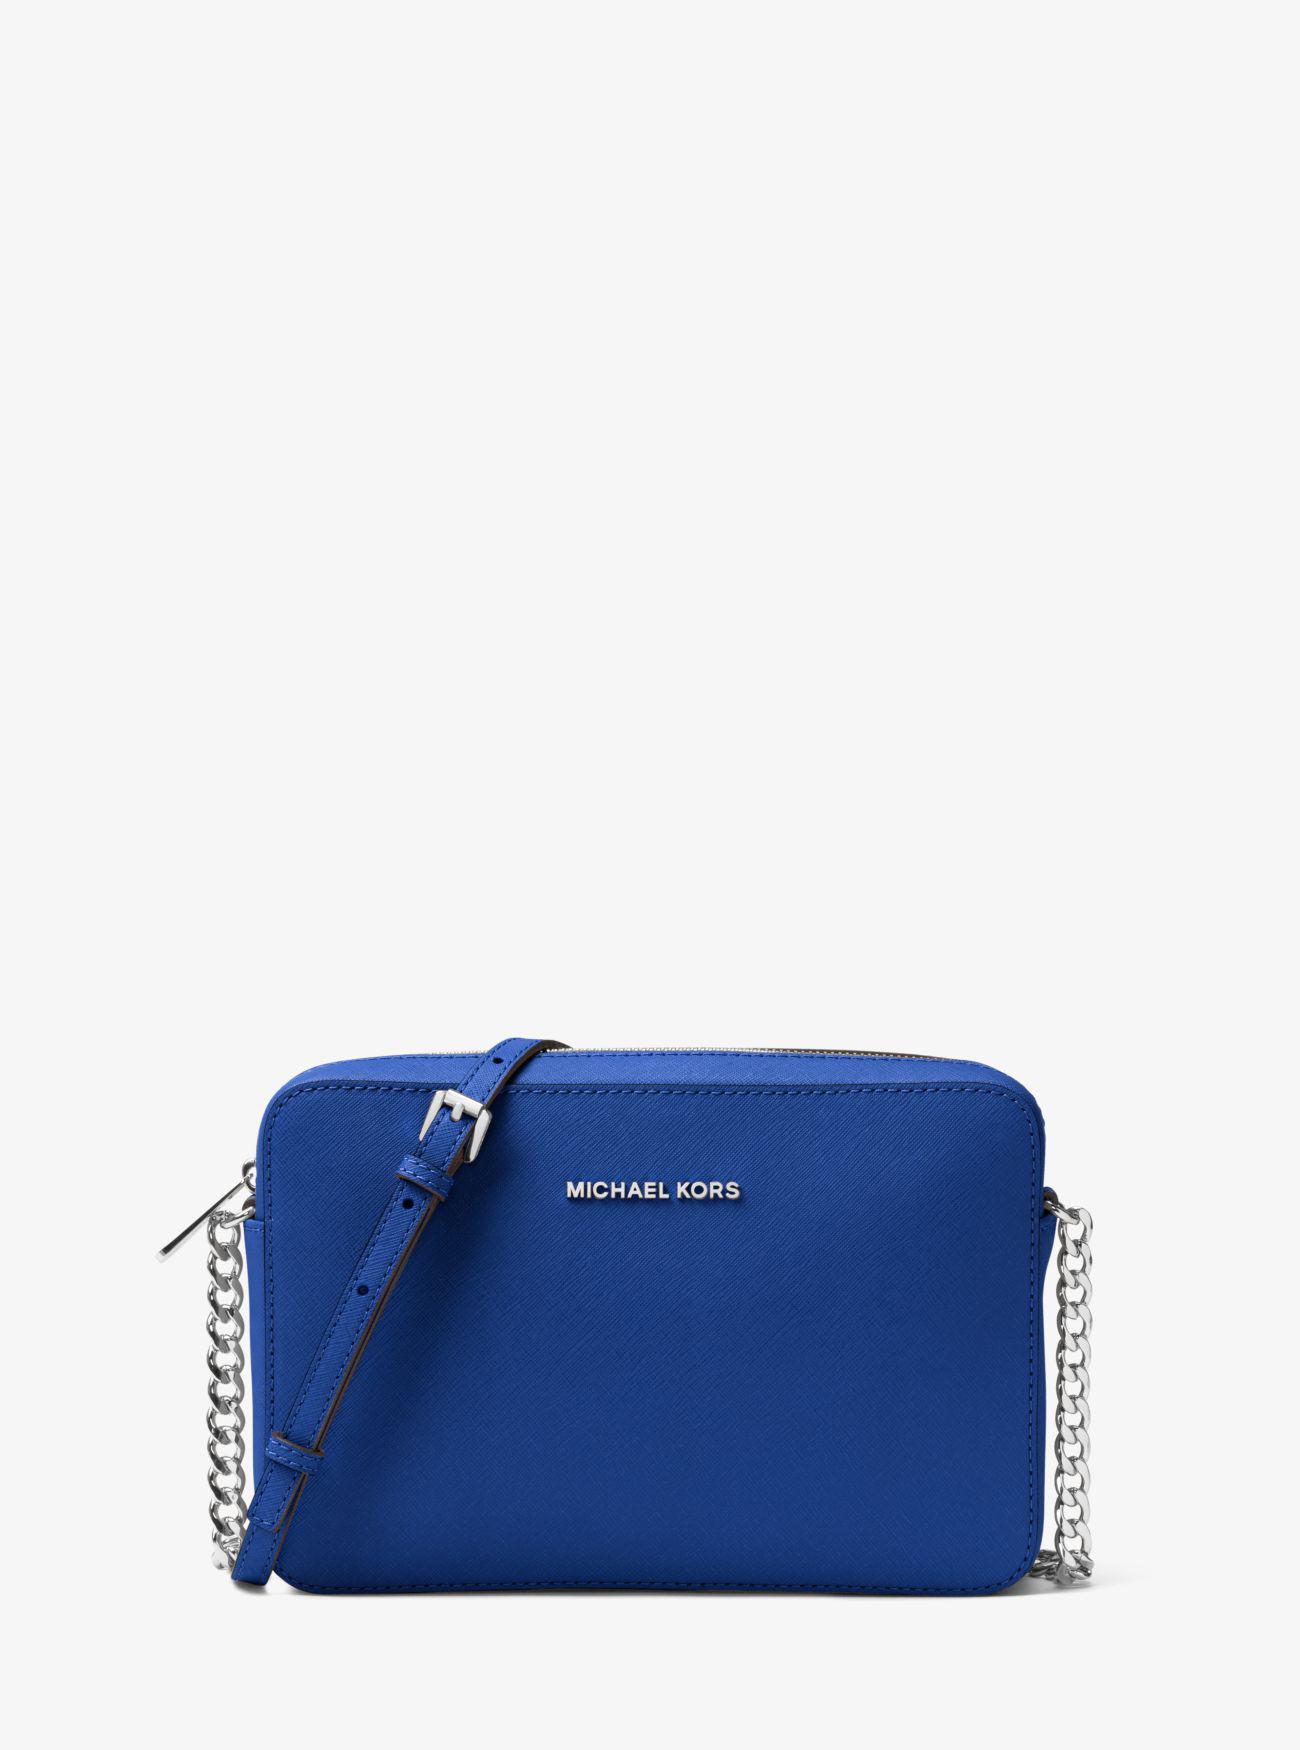 Buy Vintage Fancy BLUE Handbag....retro Accessories. Blue. Bright. Electric.  80s Glam. Killer. Dainty. Clutch. Shoulder Bag. Mod. Small Purse. Online in  India - Etsy